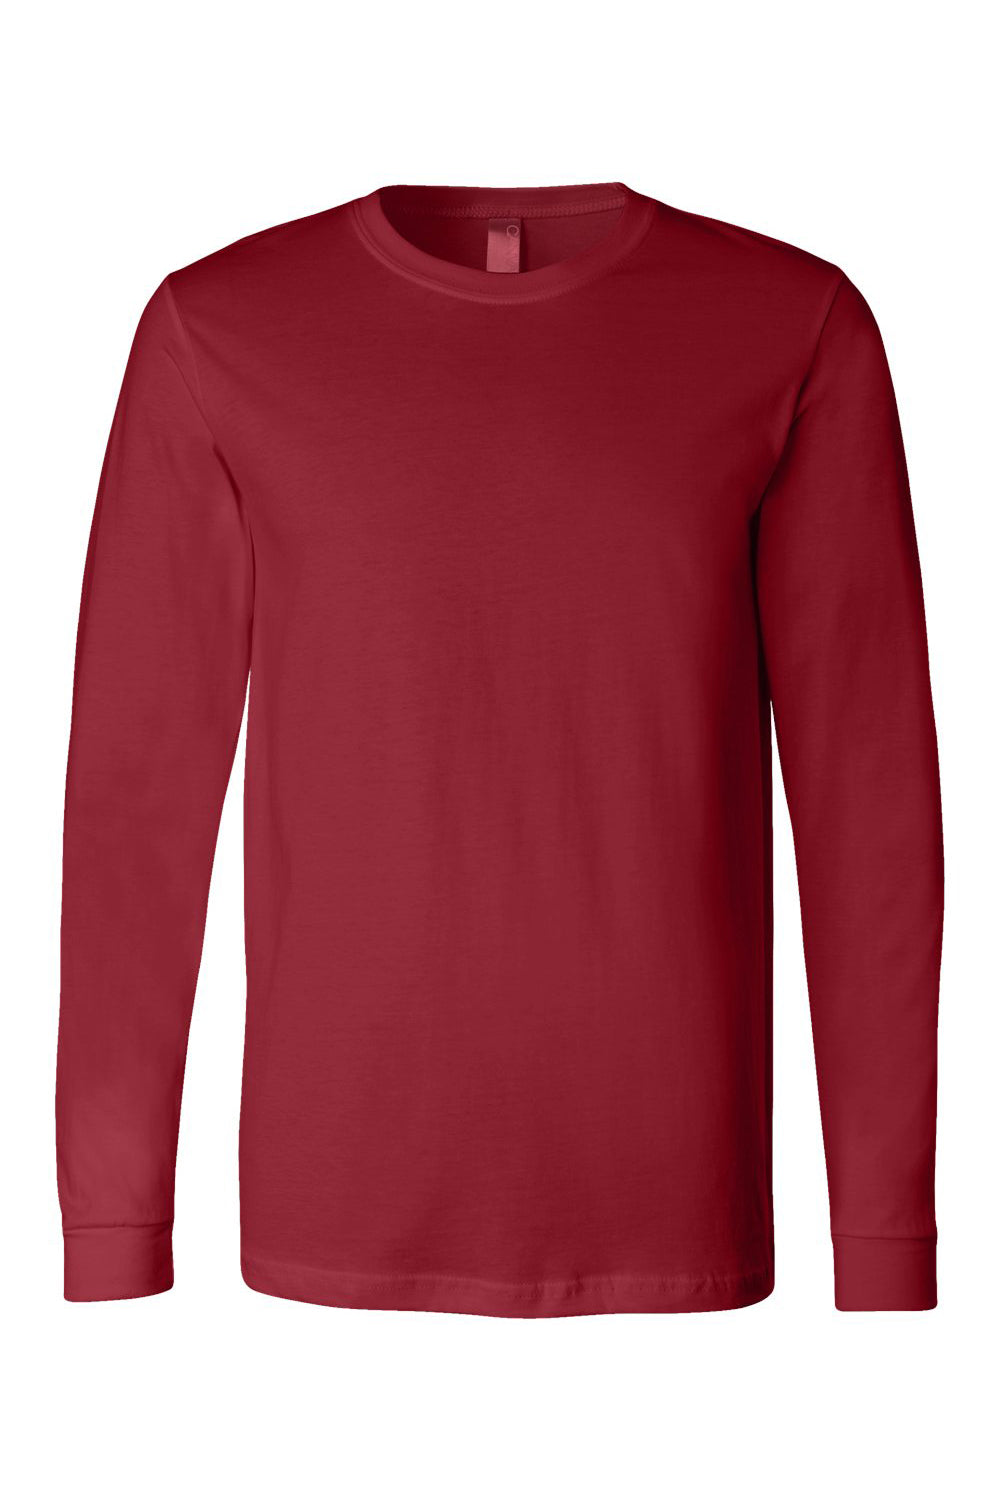 Bella + Canvas BC3501/3501 Mens Jersey Long Sleeve Crewneck T-Shirt Cardinal Red Flat Front